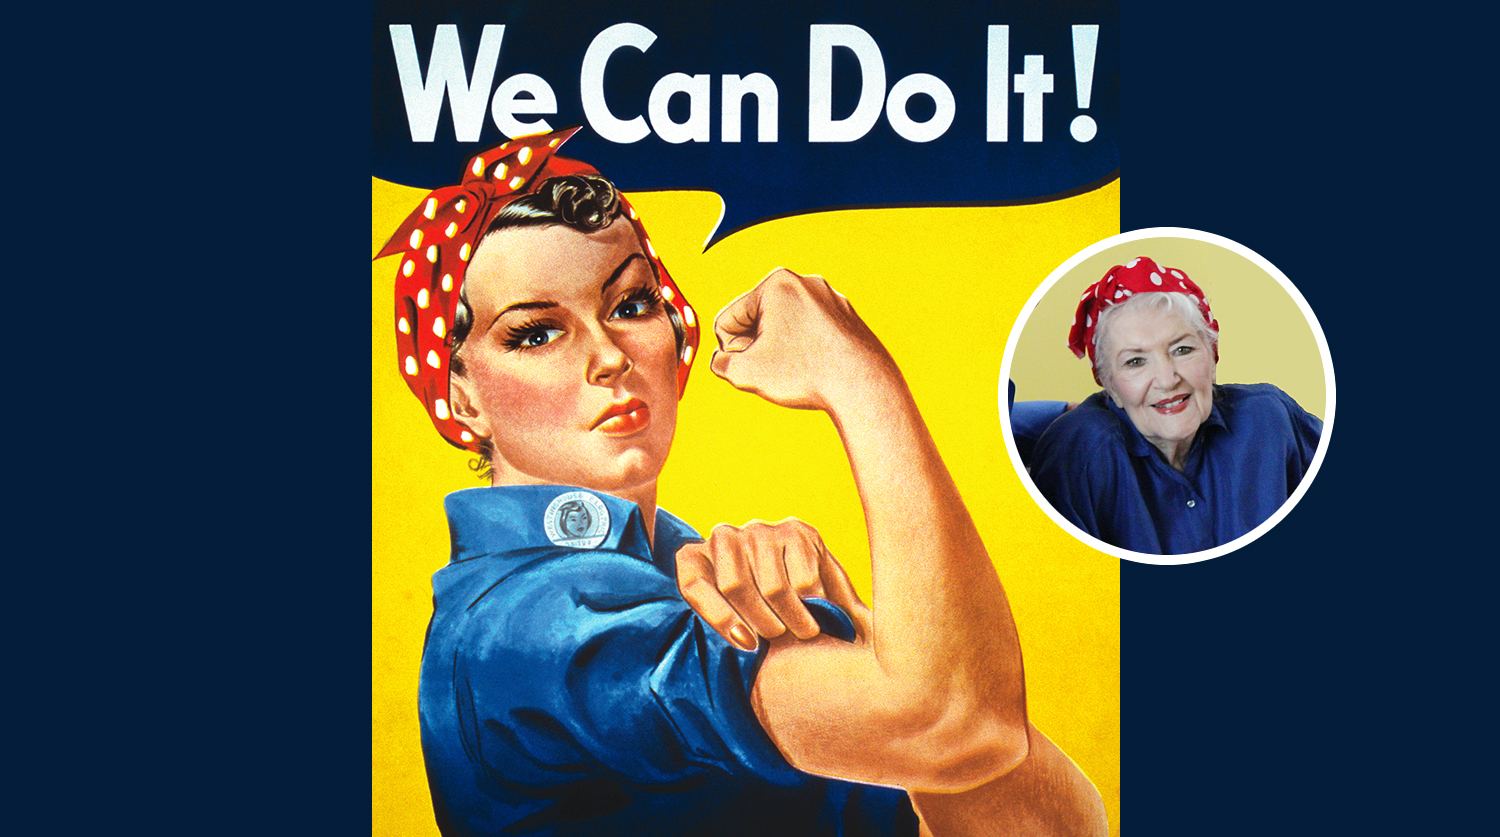 We can download. Клепальщица Рози плакат. Yes we can плакат. Клепальщица Рози агитационный плакат. Yes we can do it плакат.